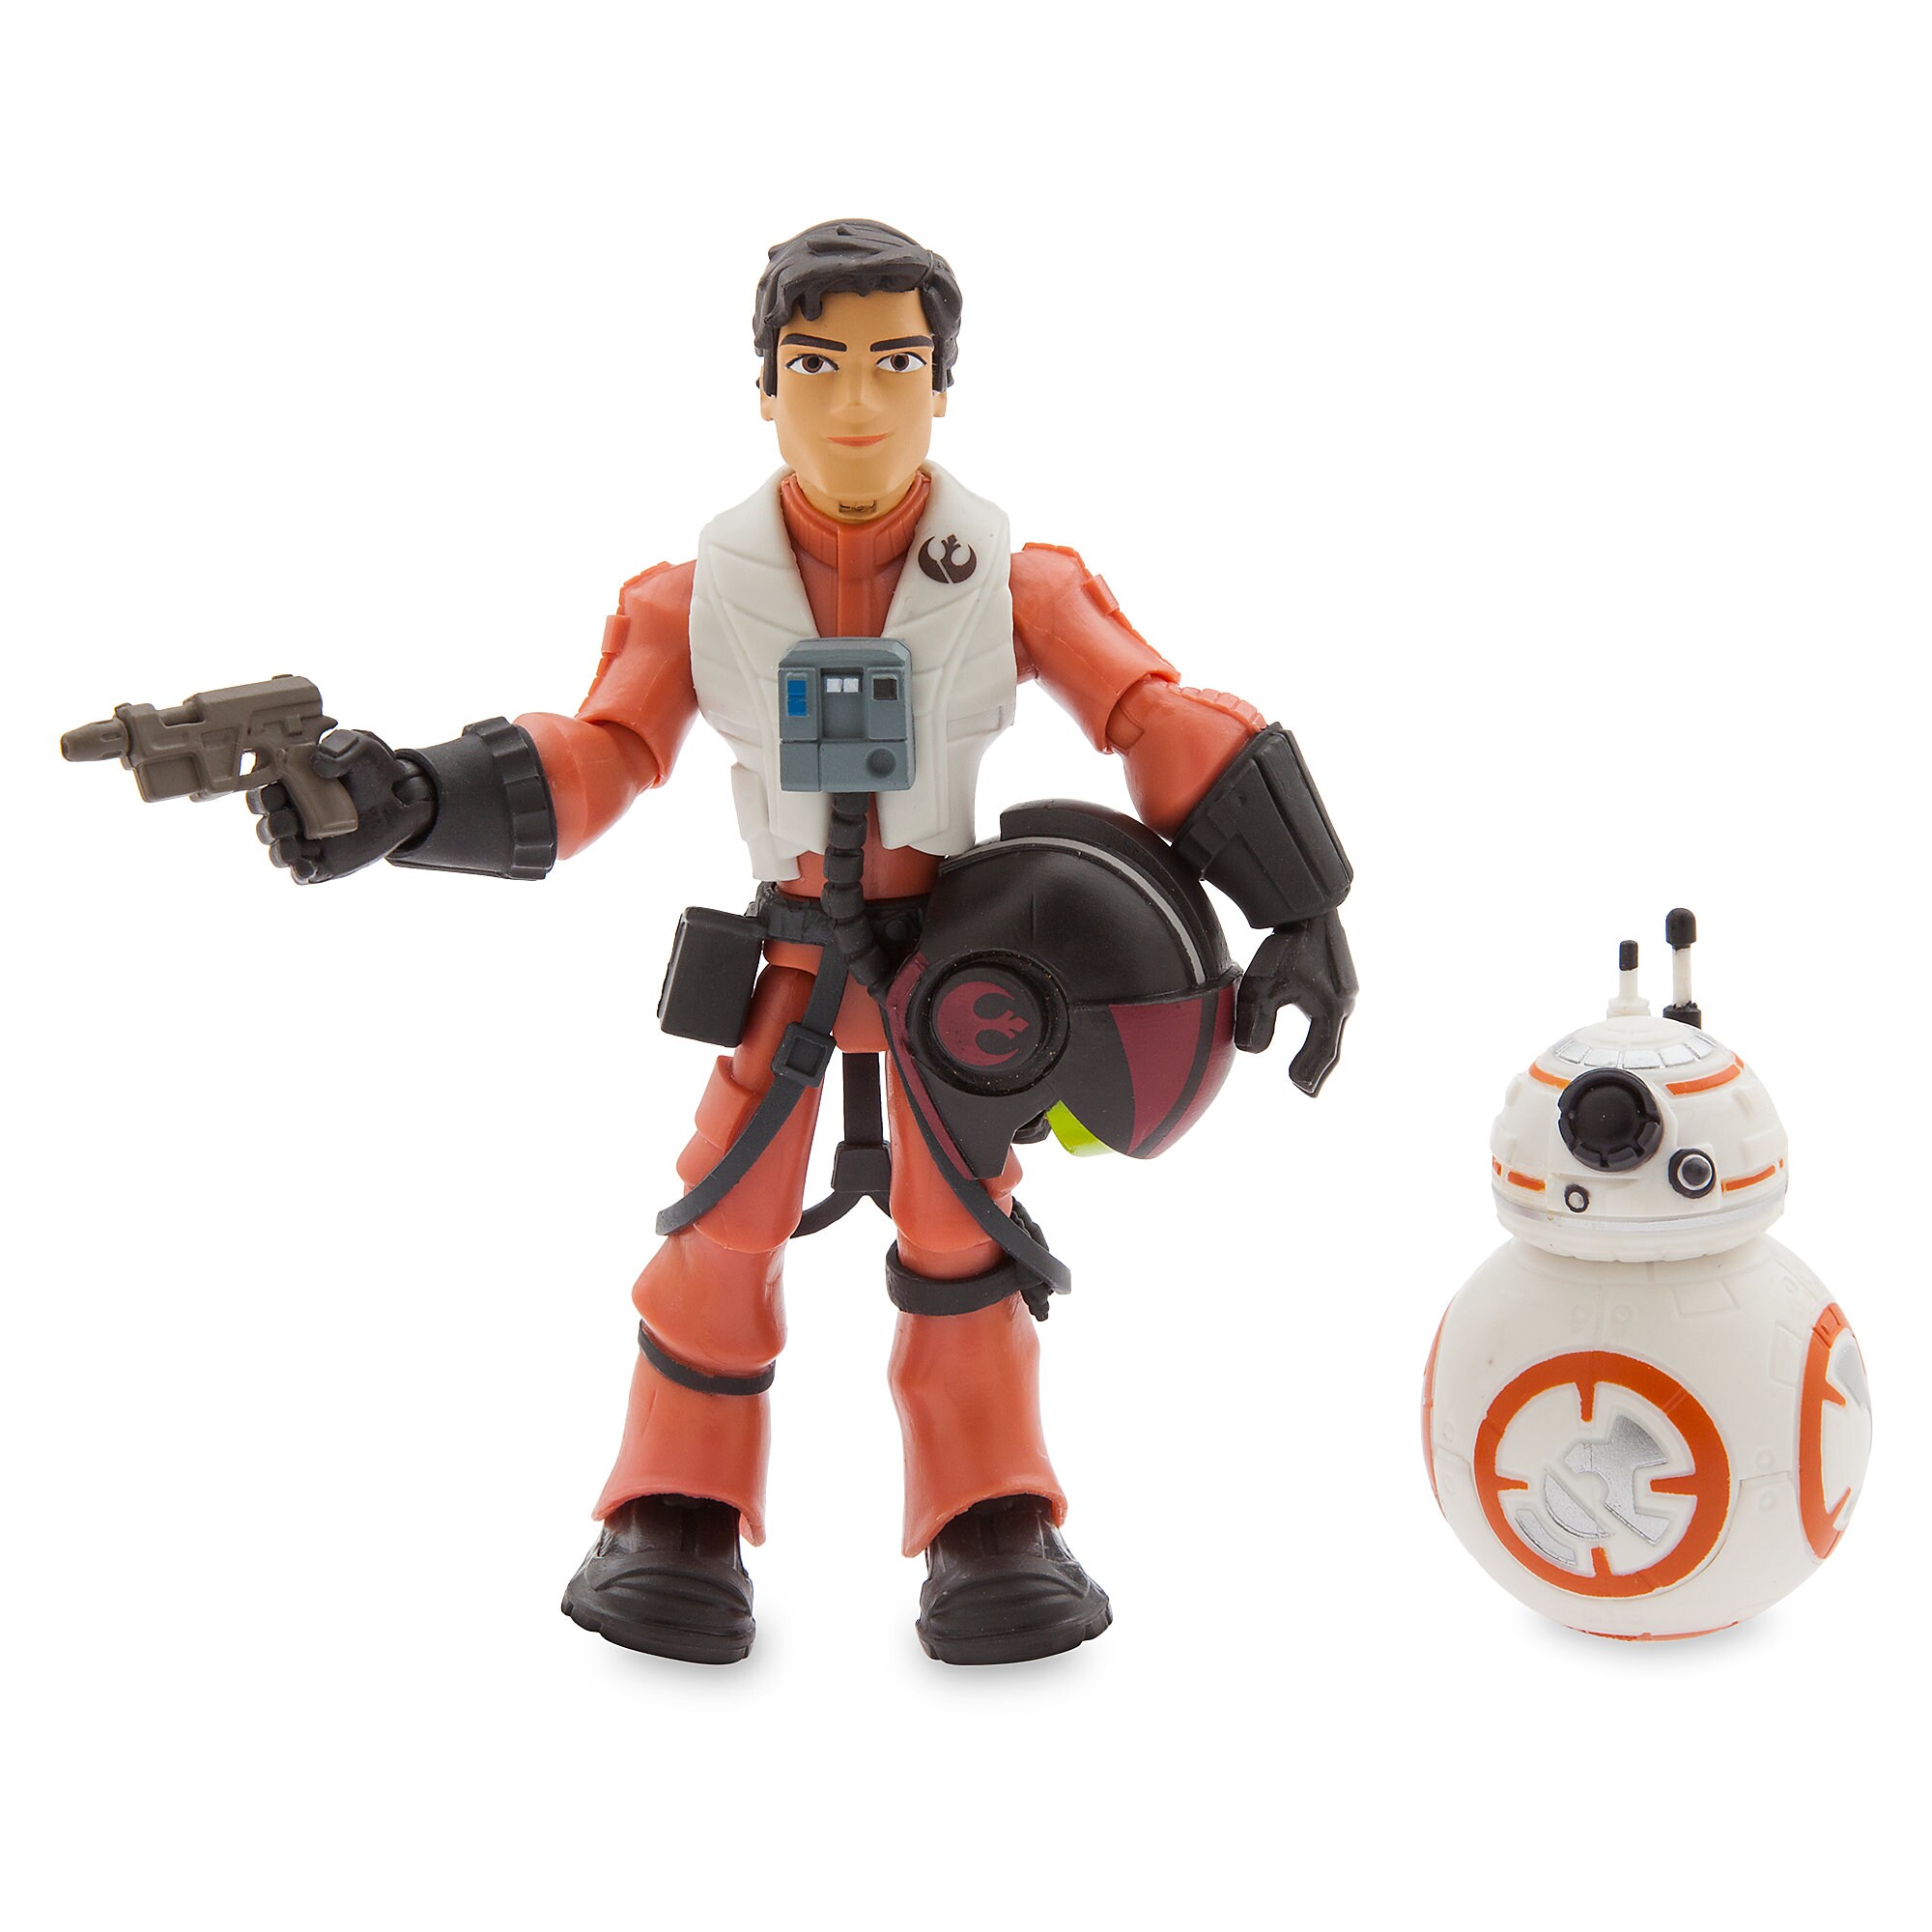 Poe Dameron Action Figure - Star Wars Toybox